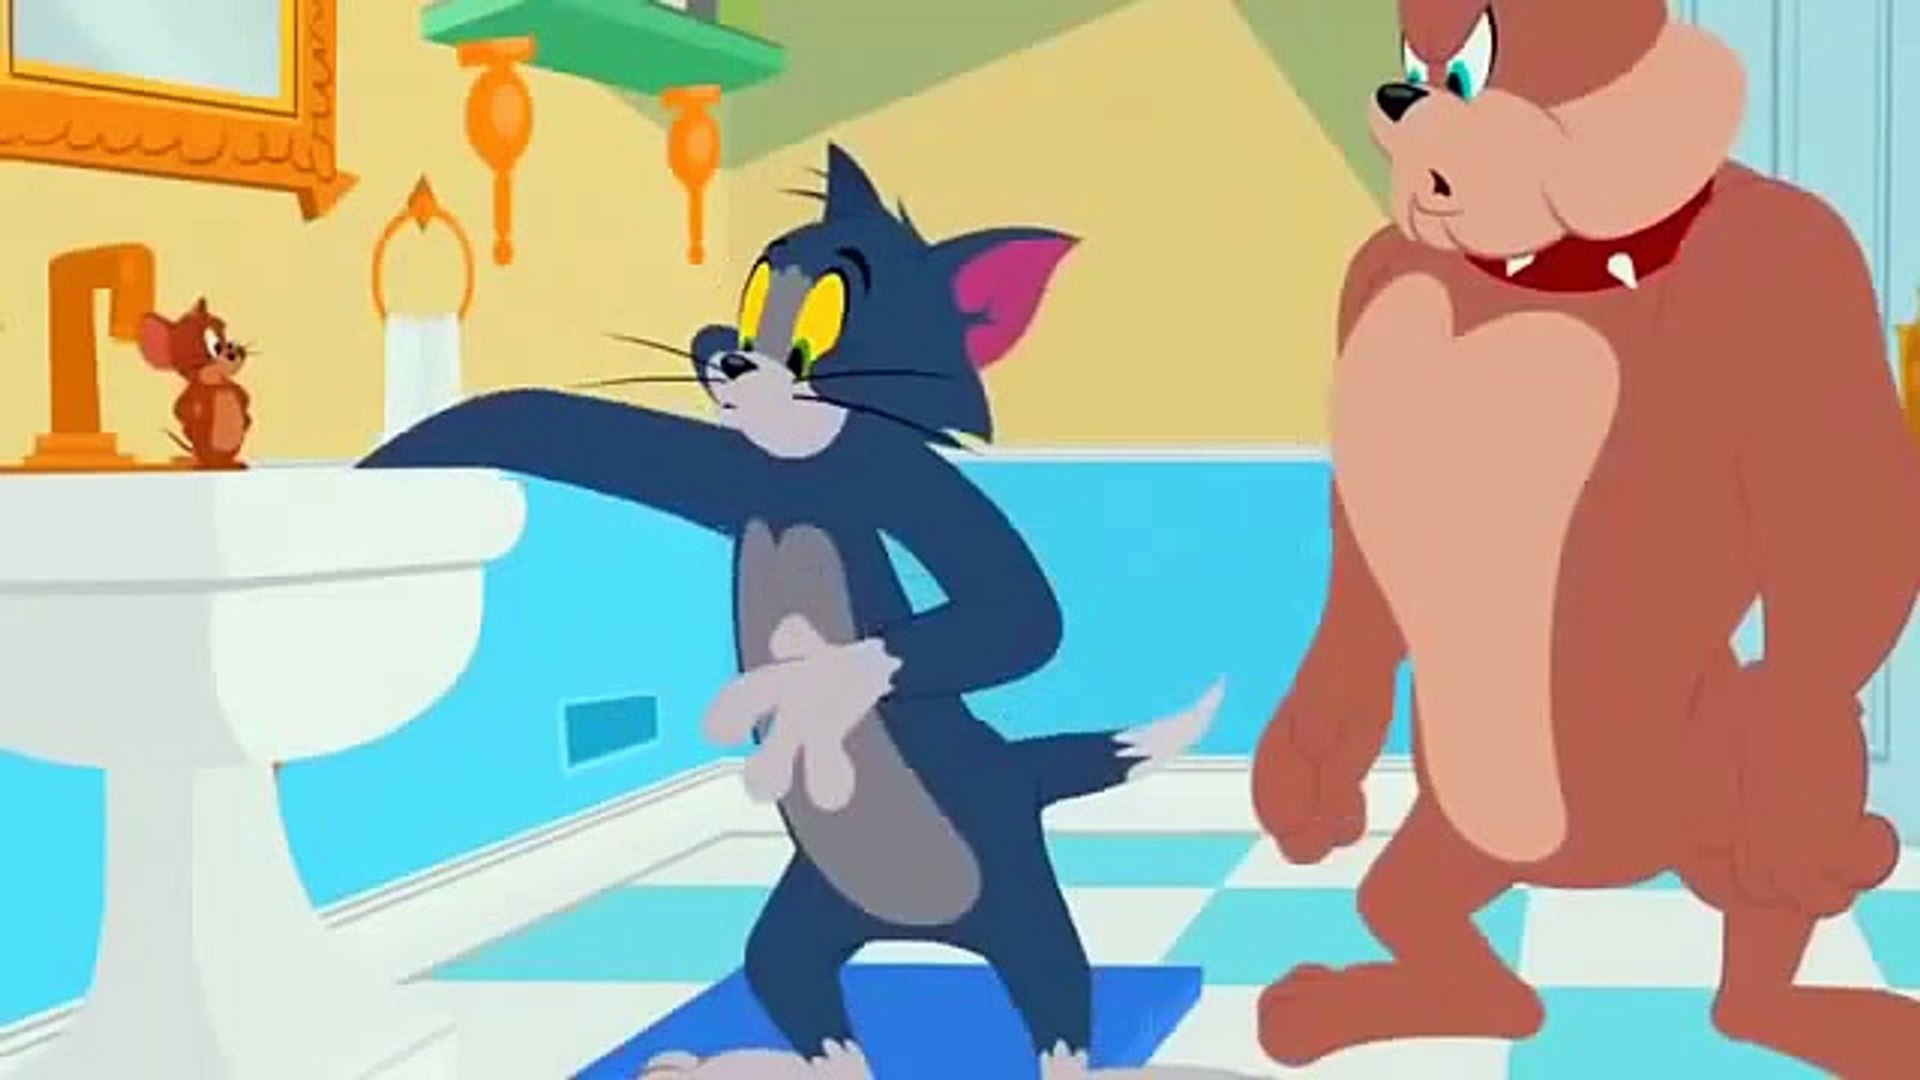 اجمل مغامرات توم وجيرى - The most beautiful adventures of Tom and Jerry -  video Dailymotion